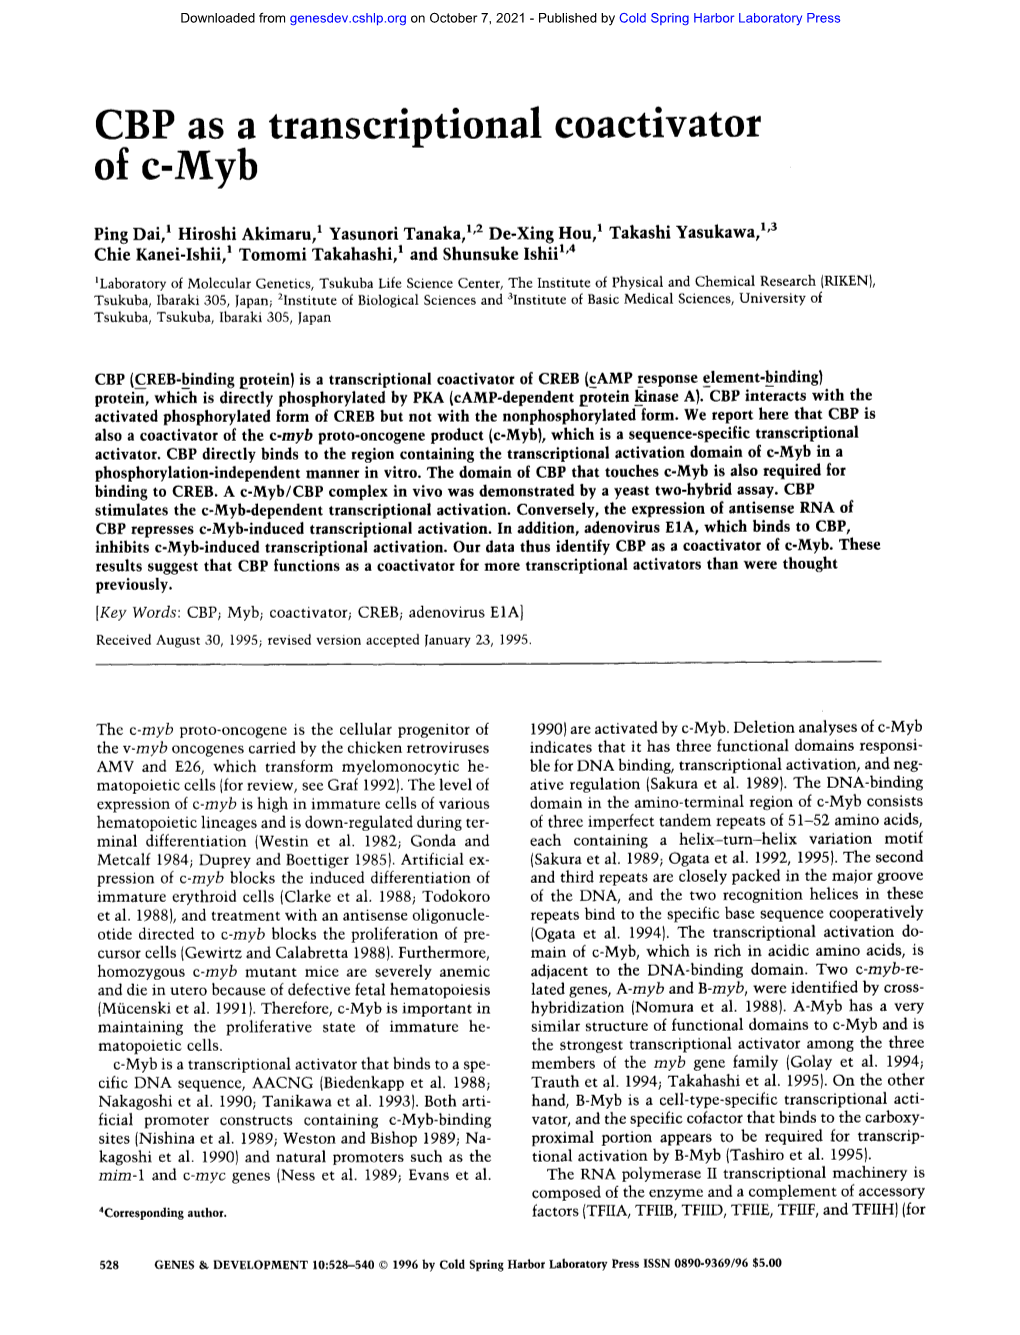 CBP As a Transcriptional Coactivator of C-Myb